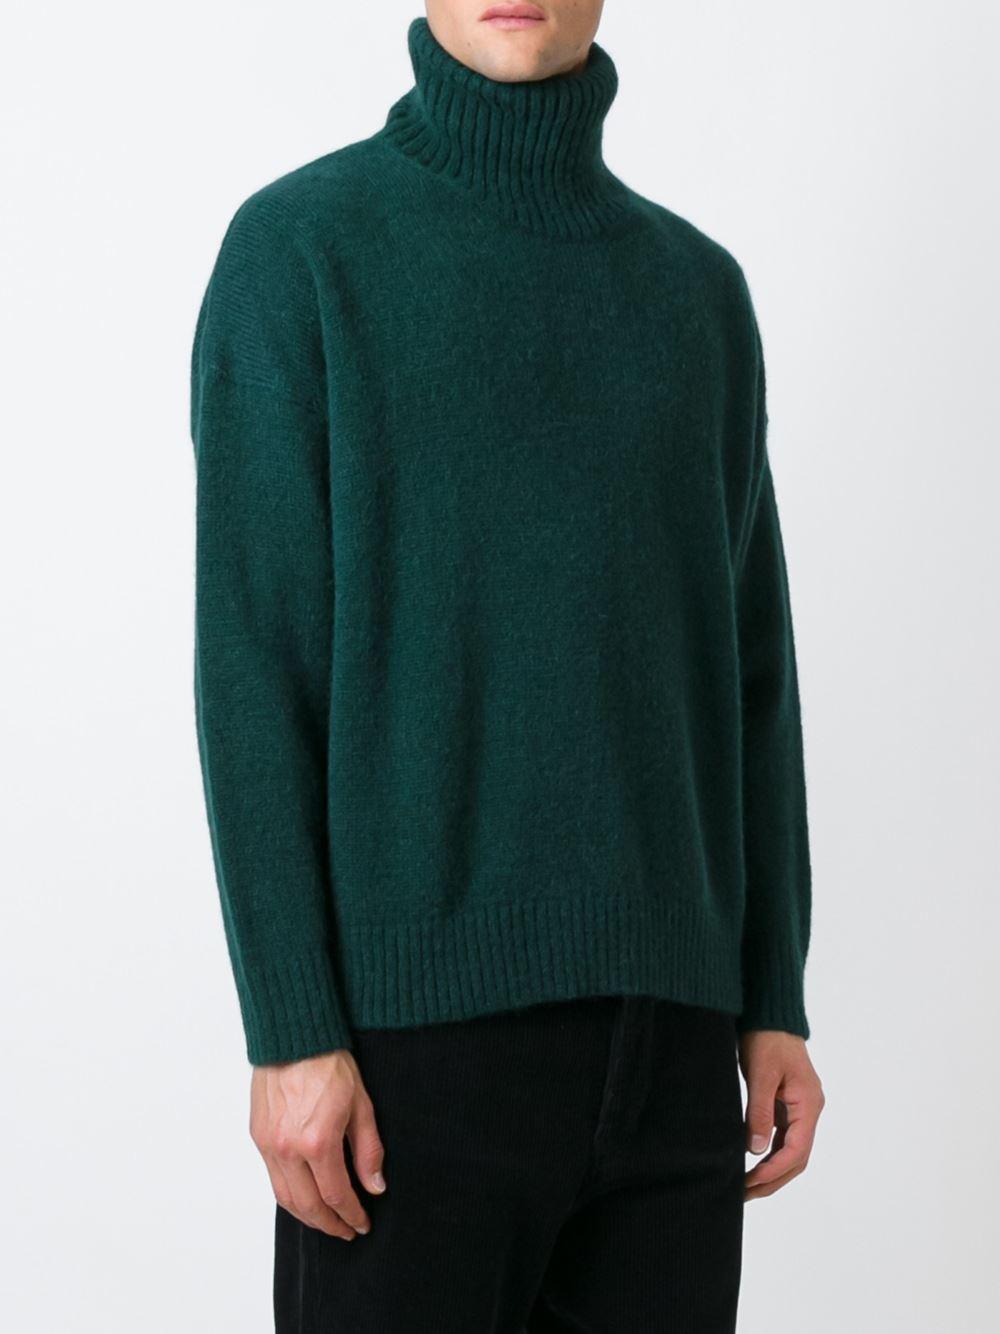 AMI Wool Oversized Turtleneck Sweater in Green for Men - Lyst